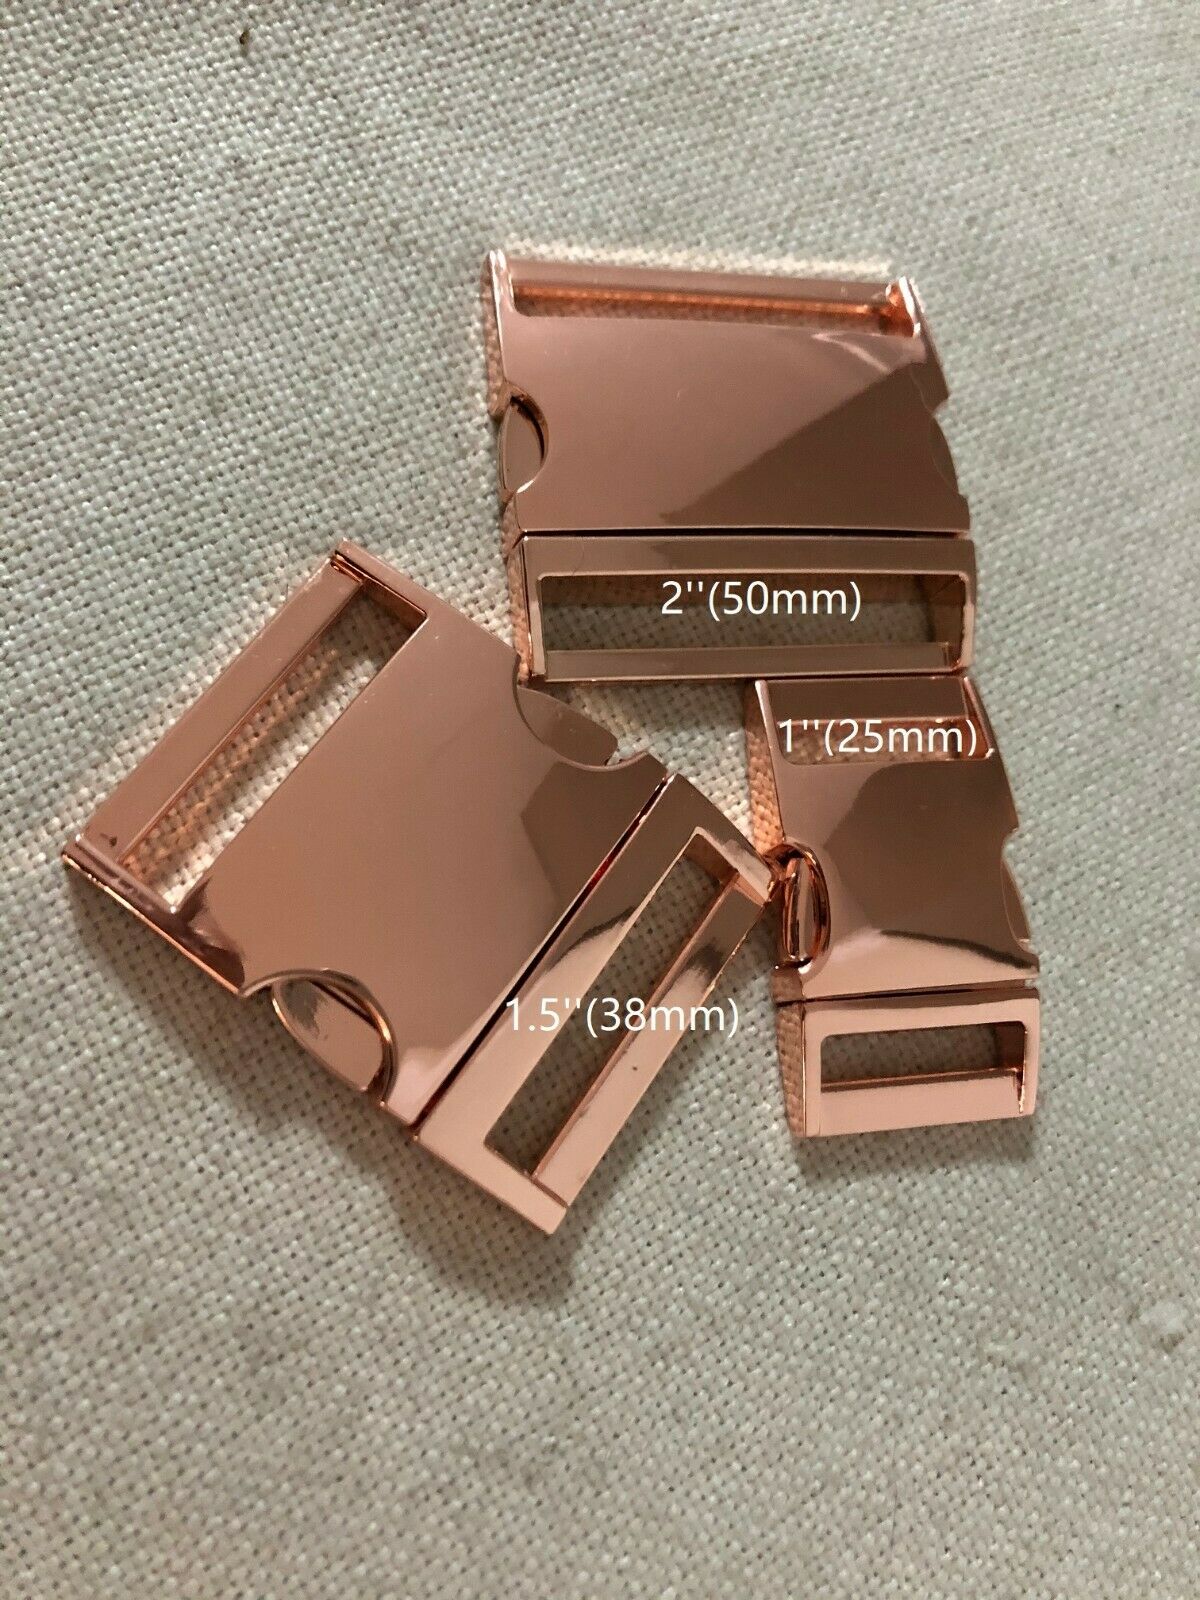 Adjustable Metal Buckle, 6Pcs 27x13mm Chain Shortener Bag Strap Clasp, Rose  Gold - Rose Gold - 27mm x 13mm - Bed Bath & Beyond - 36337055